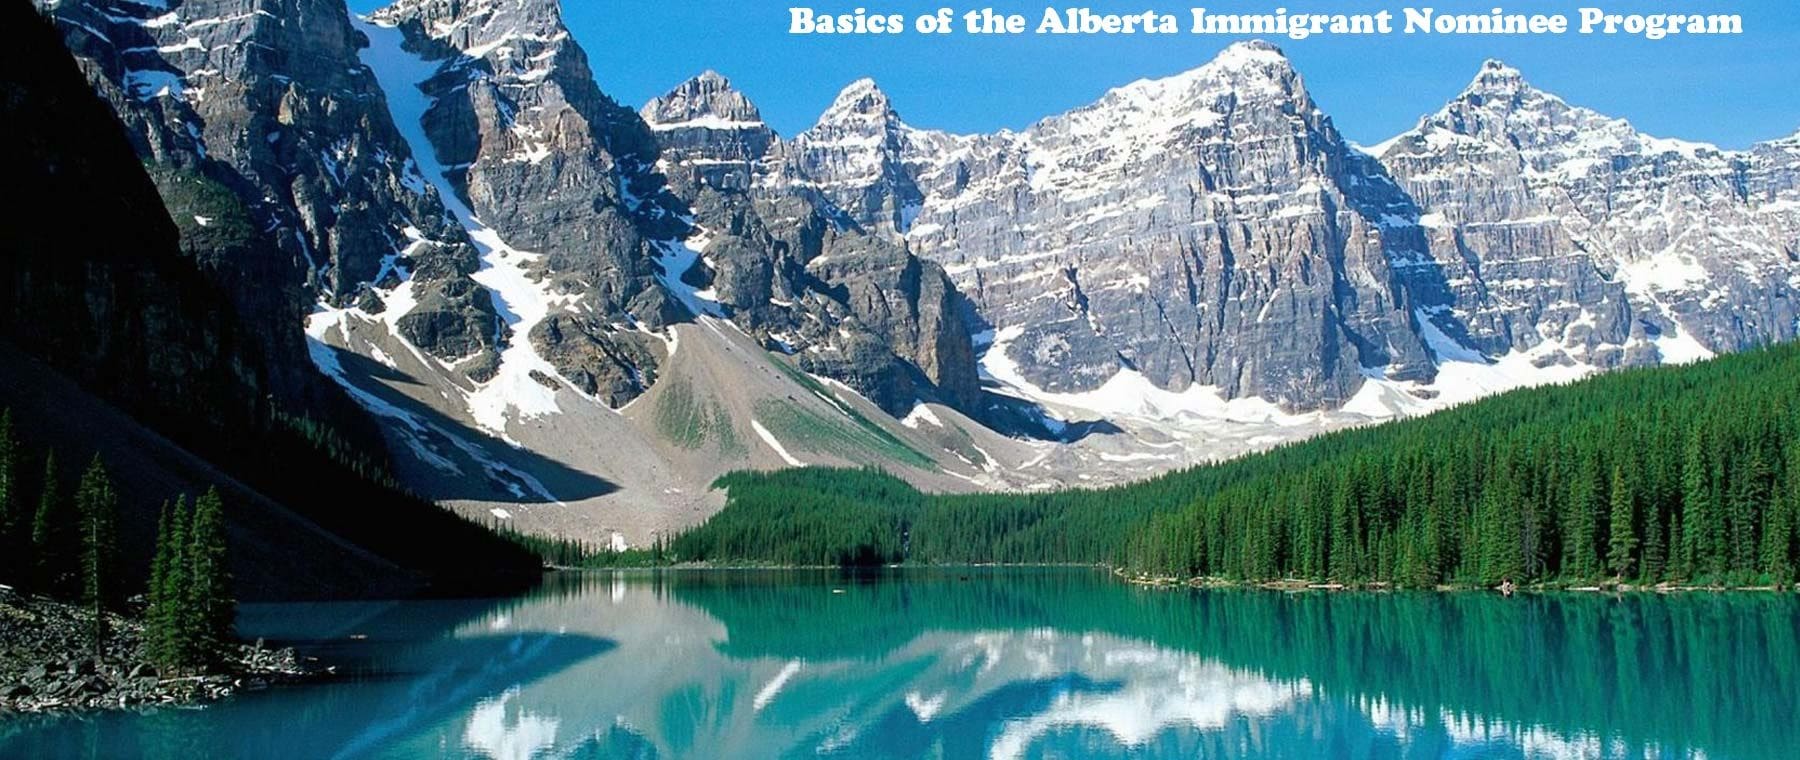 Basics-of-the-Alberta-Immigrant-Nominee-Program.jpg